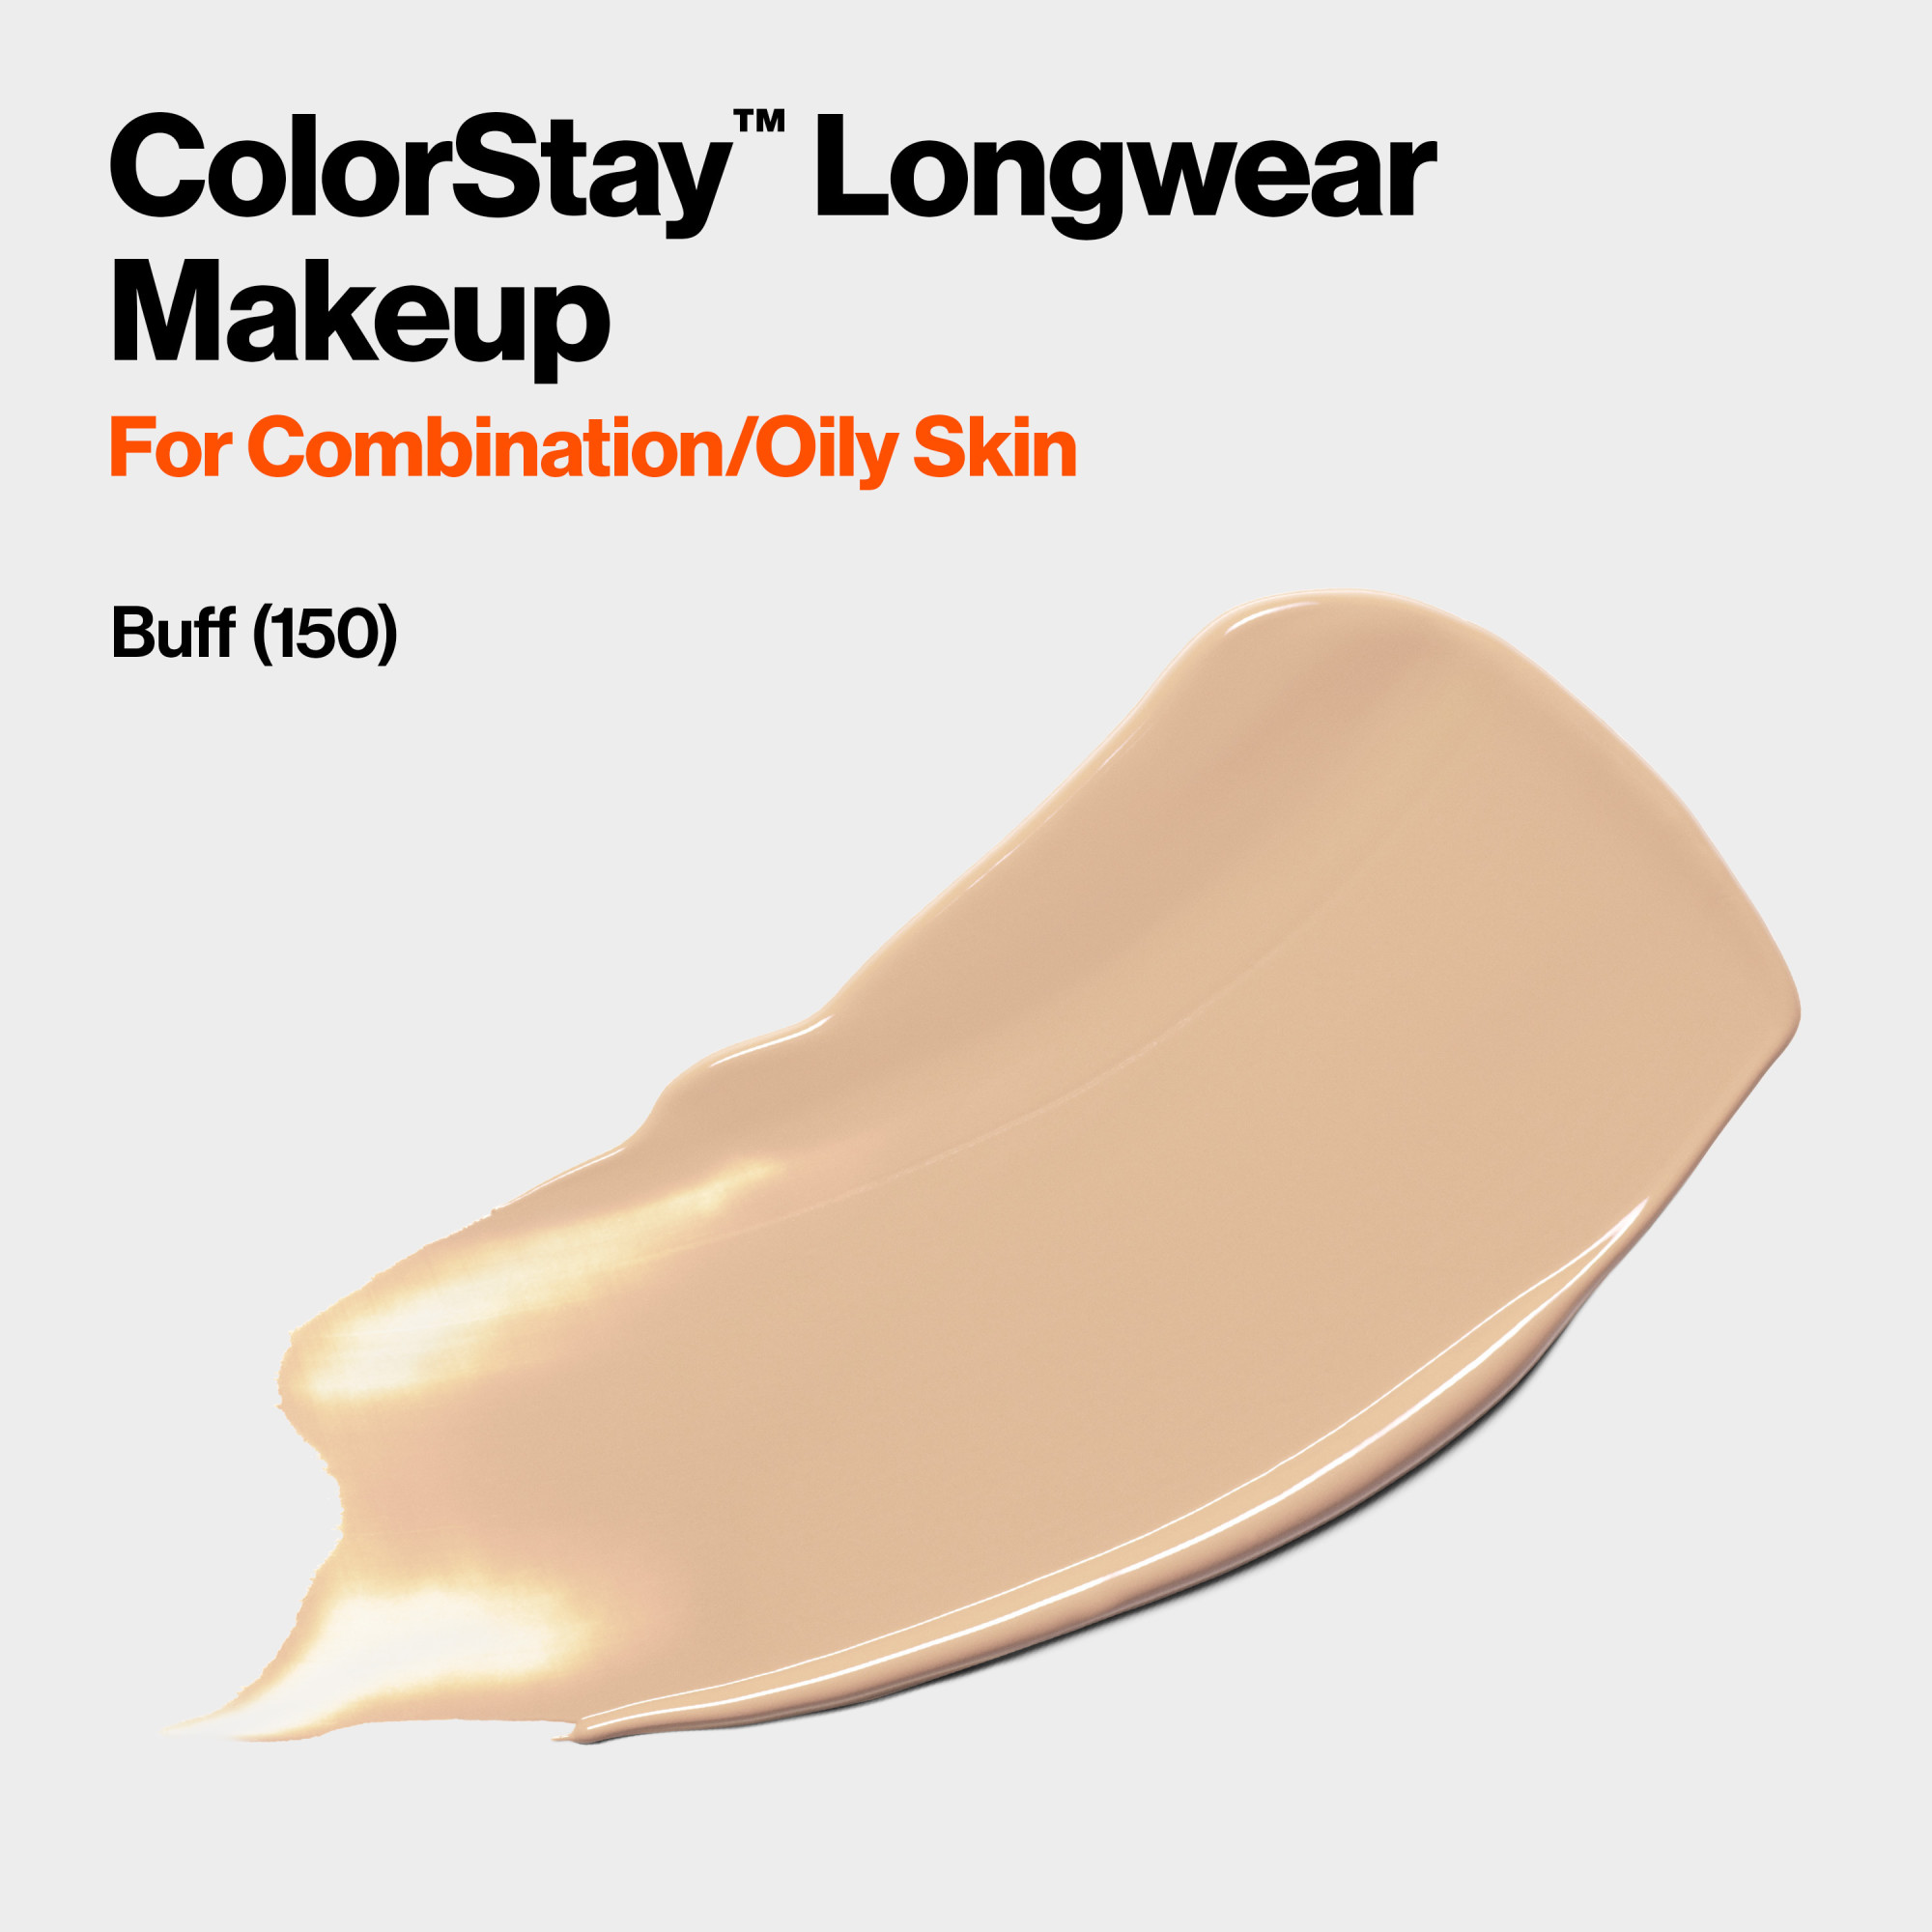 Revlon ColorStay Liquid Foundation Makeup, Matte Finish, Combination/Oily Skin, SPF 15, 150 Buff, 1 fl oz. - image 3 of 11